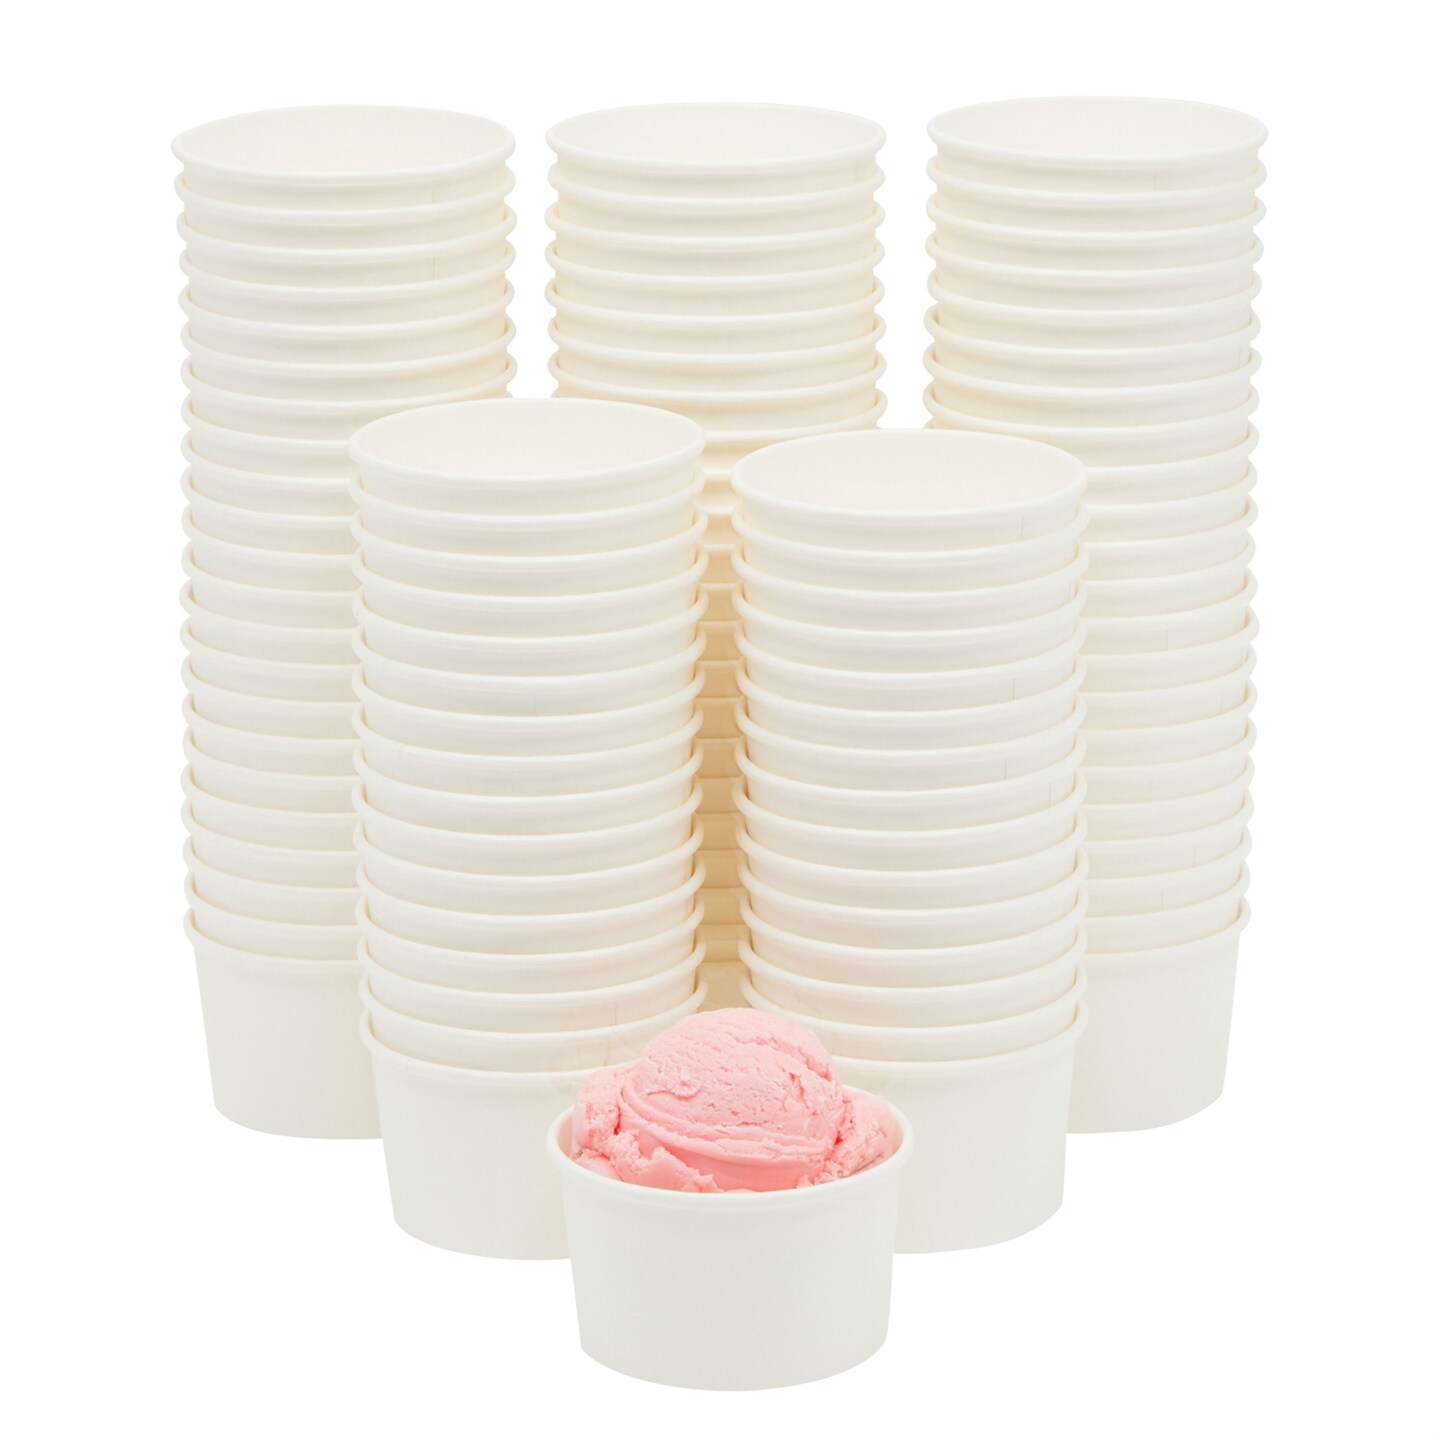 100 Pack Disposable Paper Ice Cream Cups, Dessert Bowls for Sundae Bar, Frozen Yogurt (White, 8 oz)